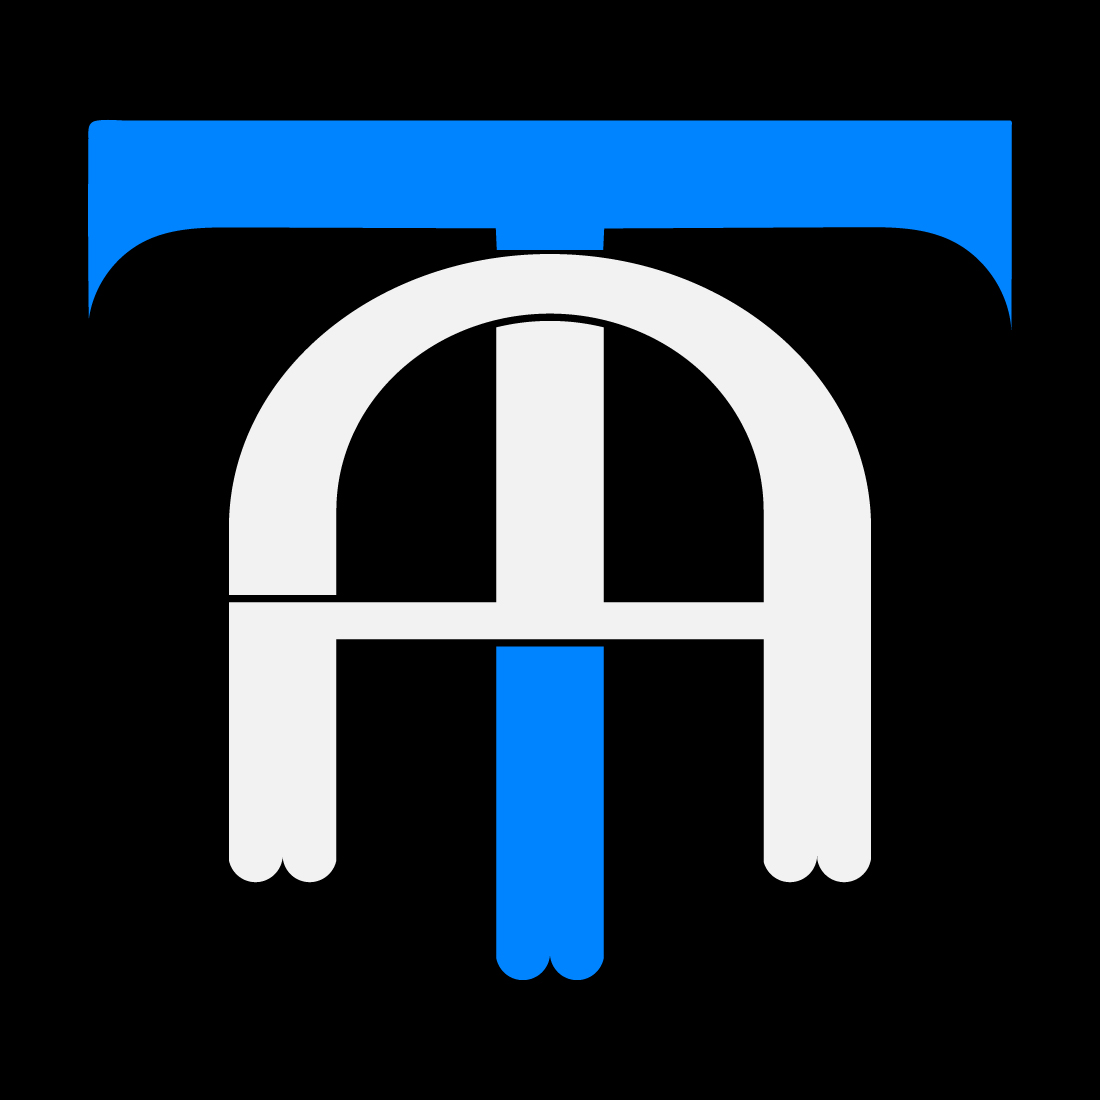 Monogram Logo Template cover image.